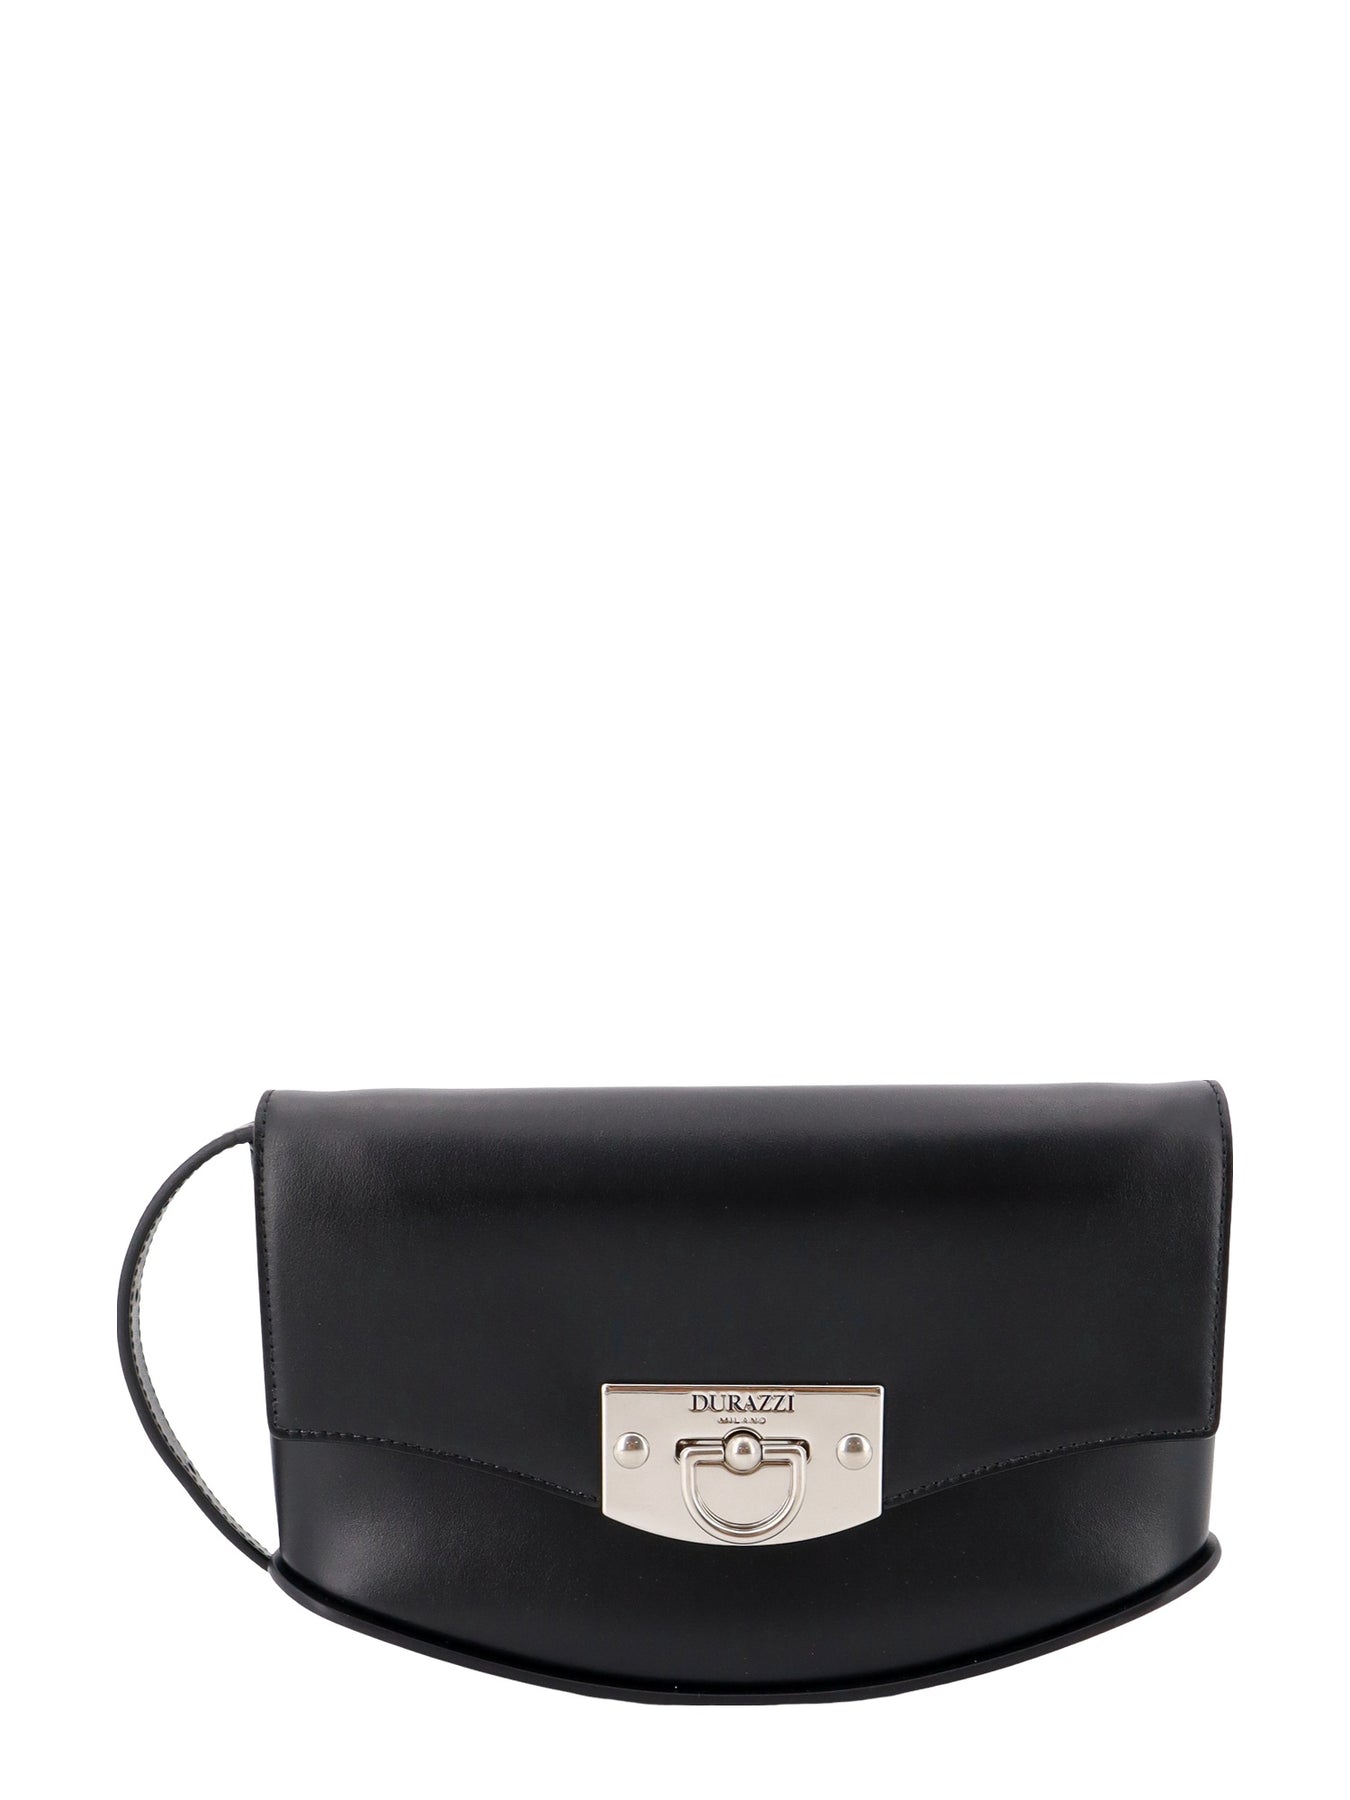 Durazzi Milano Flip-lock Leather Shoulder Bag In Black